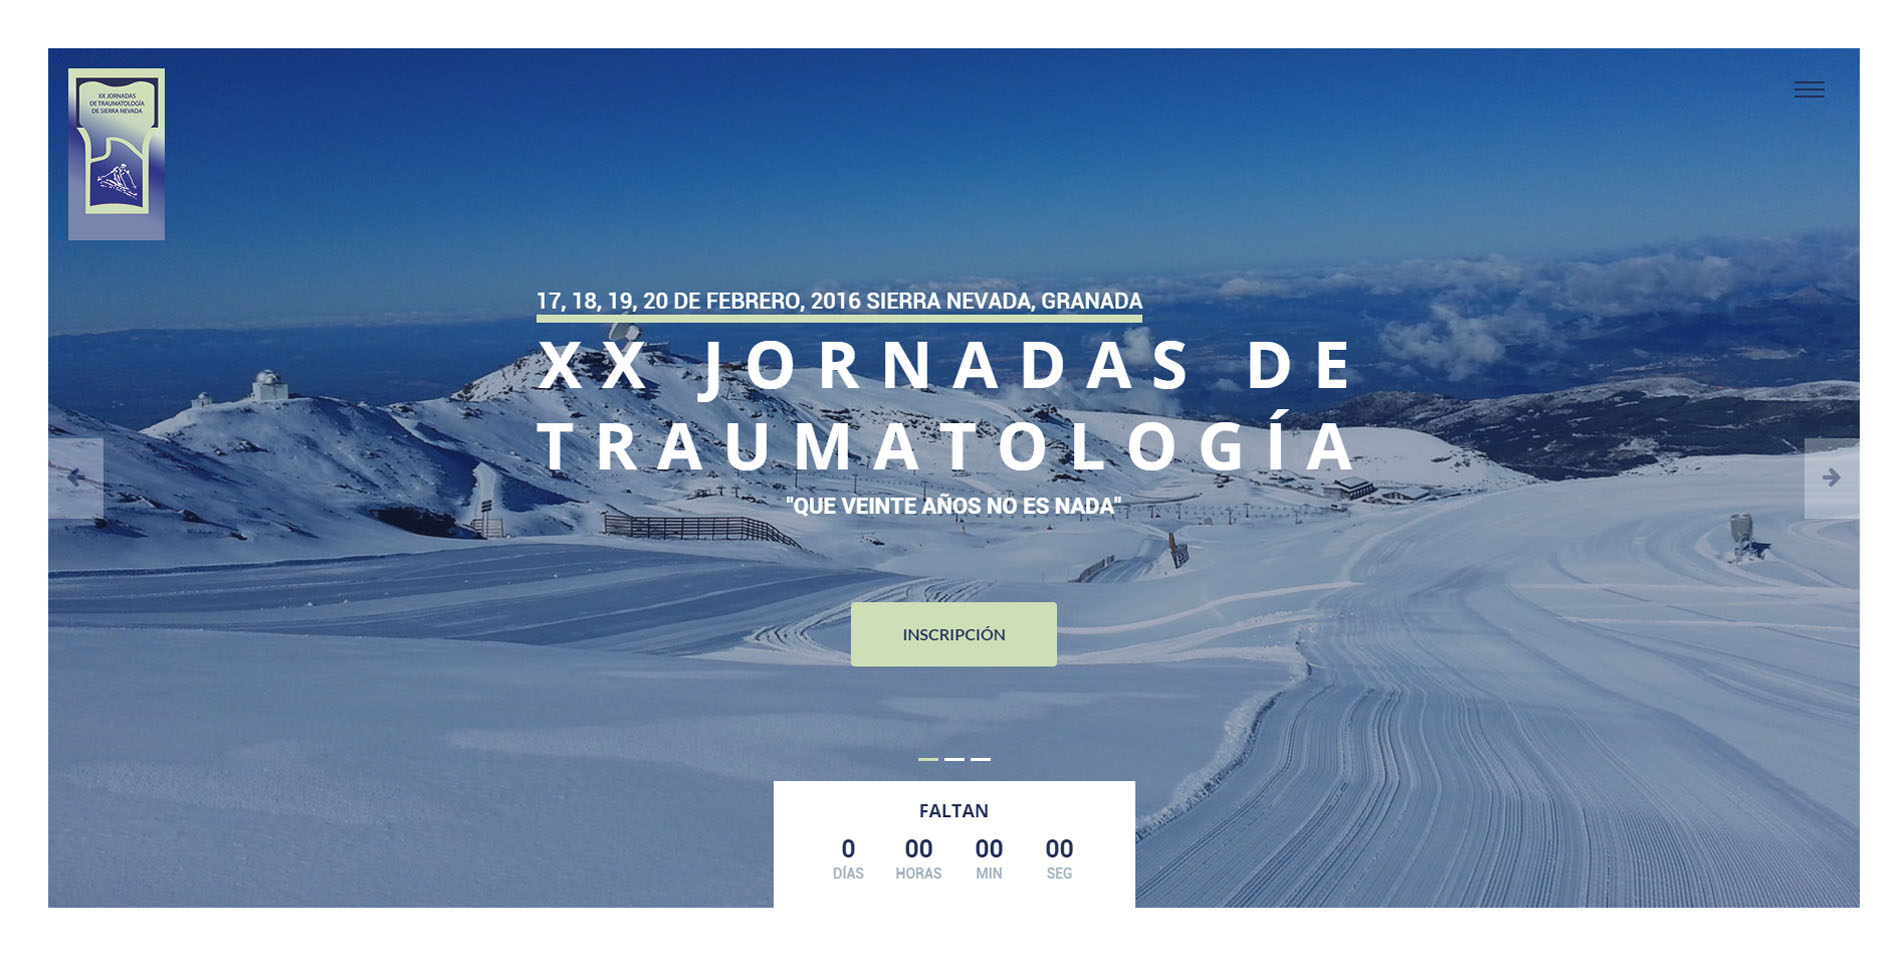 XX Jornadas de Traumatología de Sierra Nevada 2016